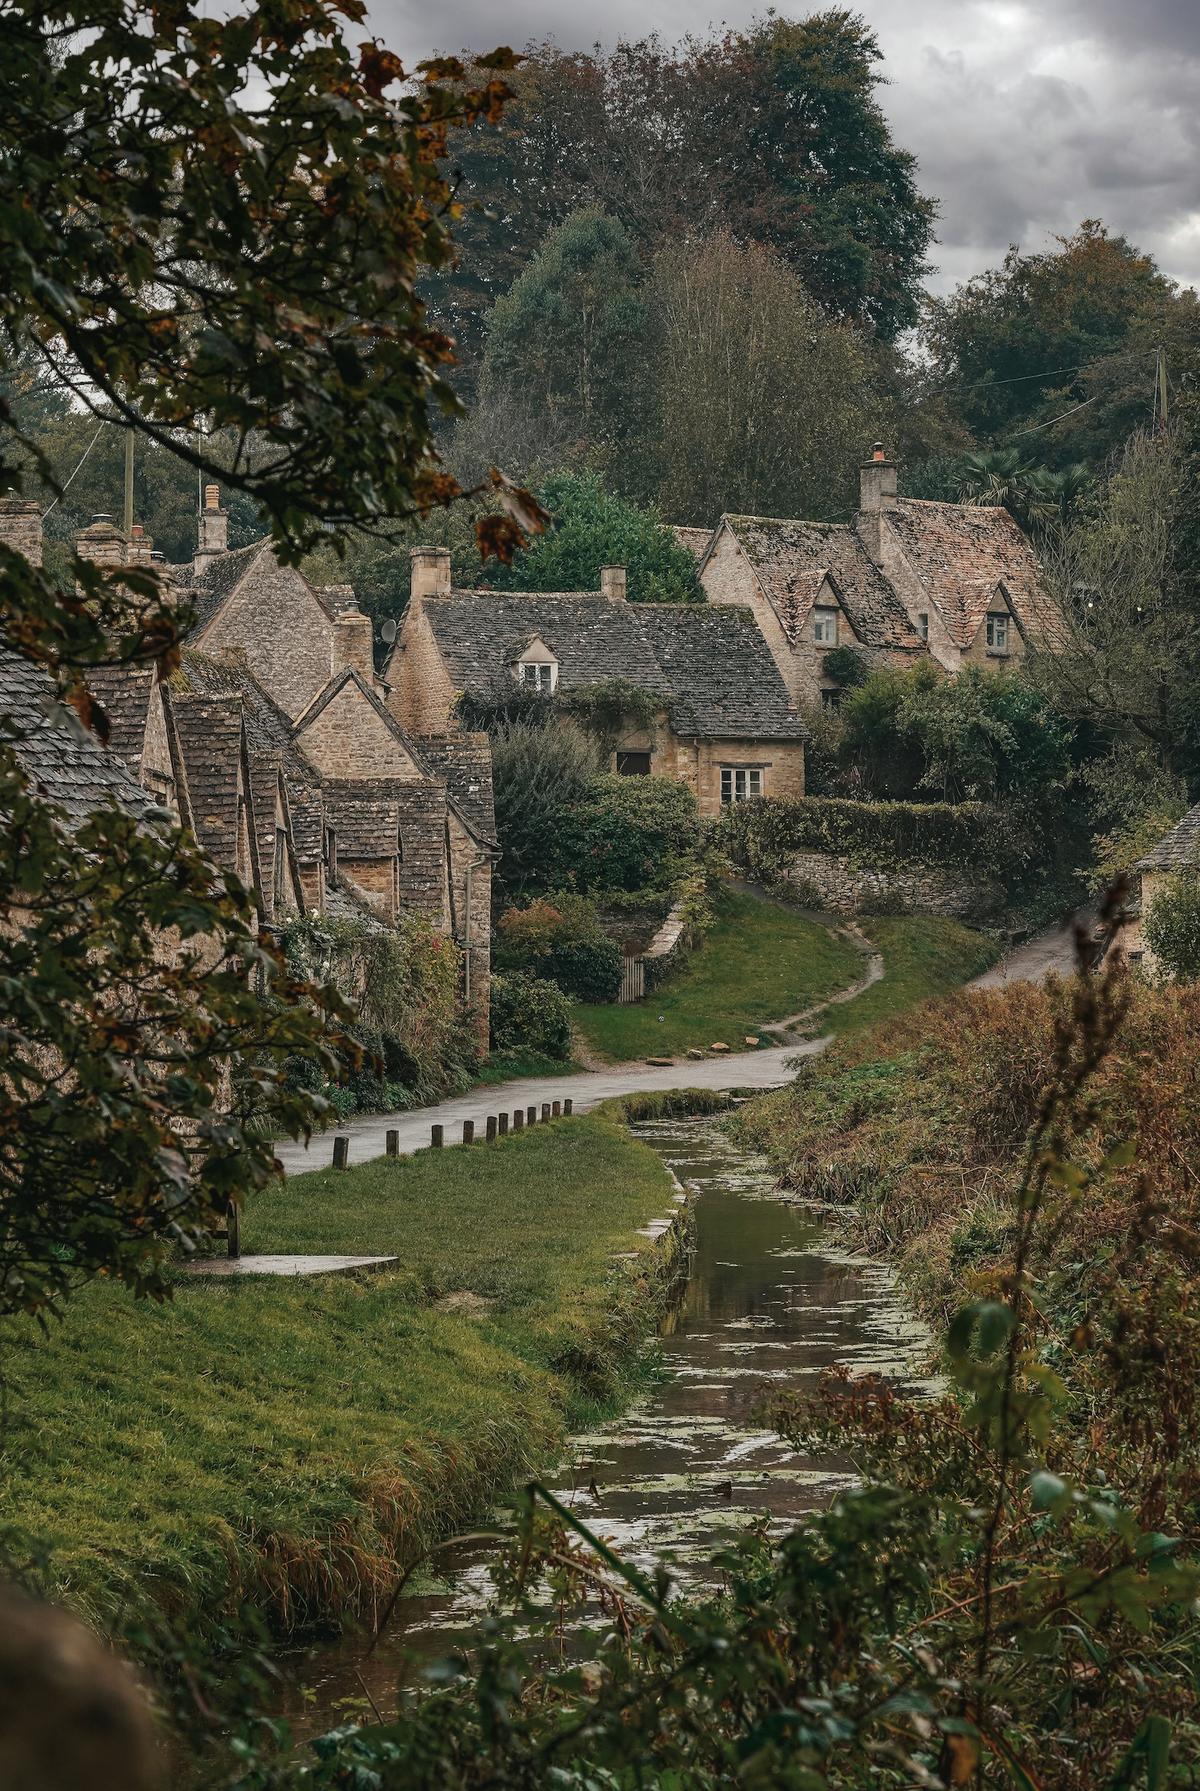 Bibury, Cotswolds, Gloucestershire, UK, photo taken in October 2021. (Courtesy of <a href="https://www.instagram.com/chrishayward.uk/">Chris Hayward</a>)